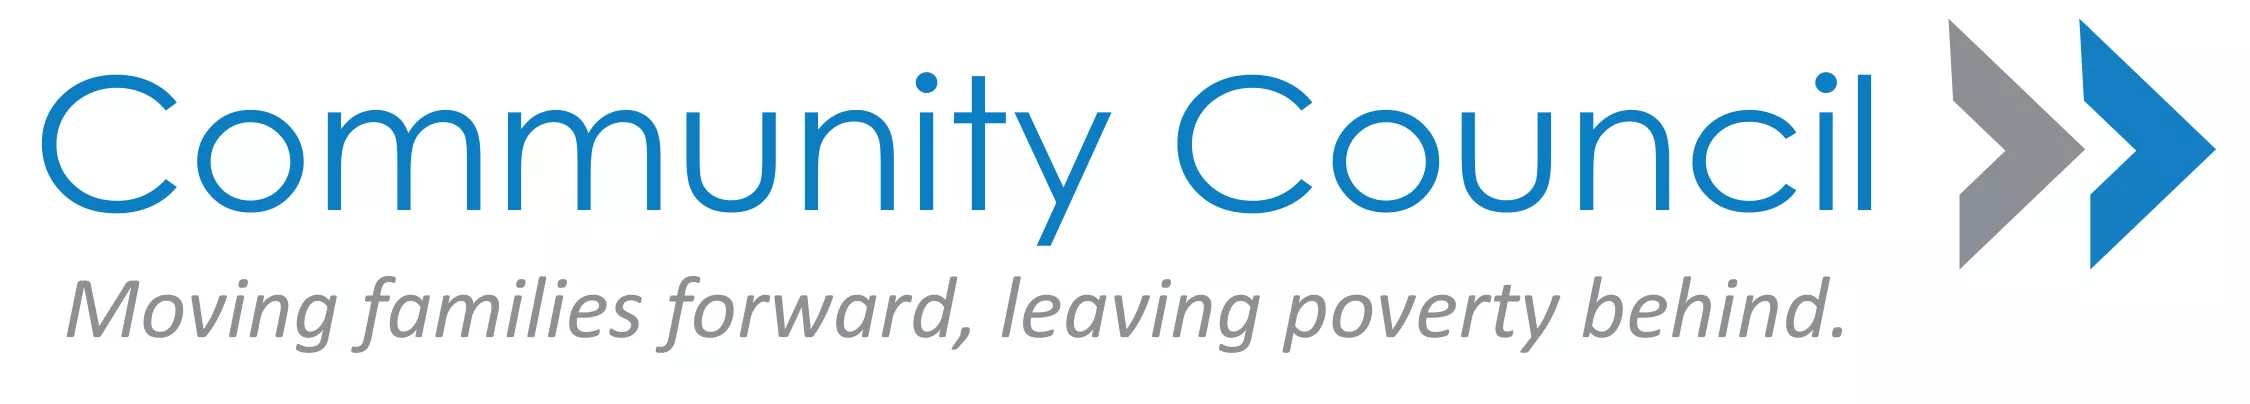 community council logo